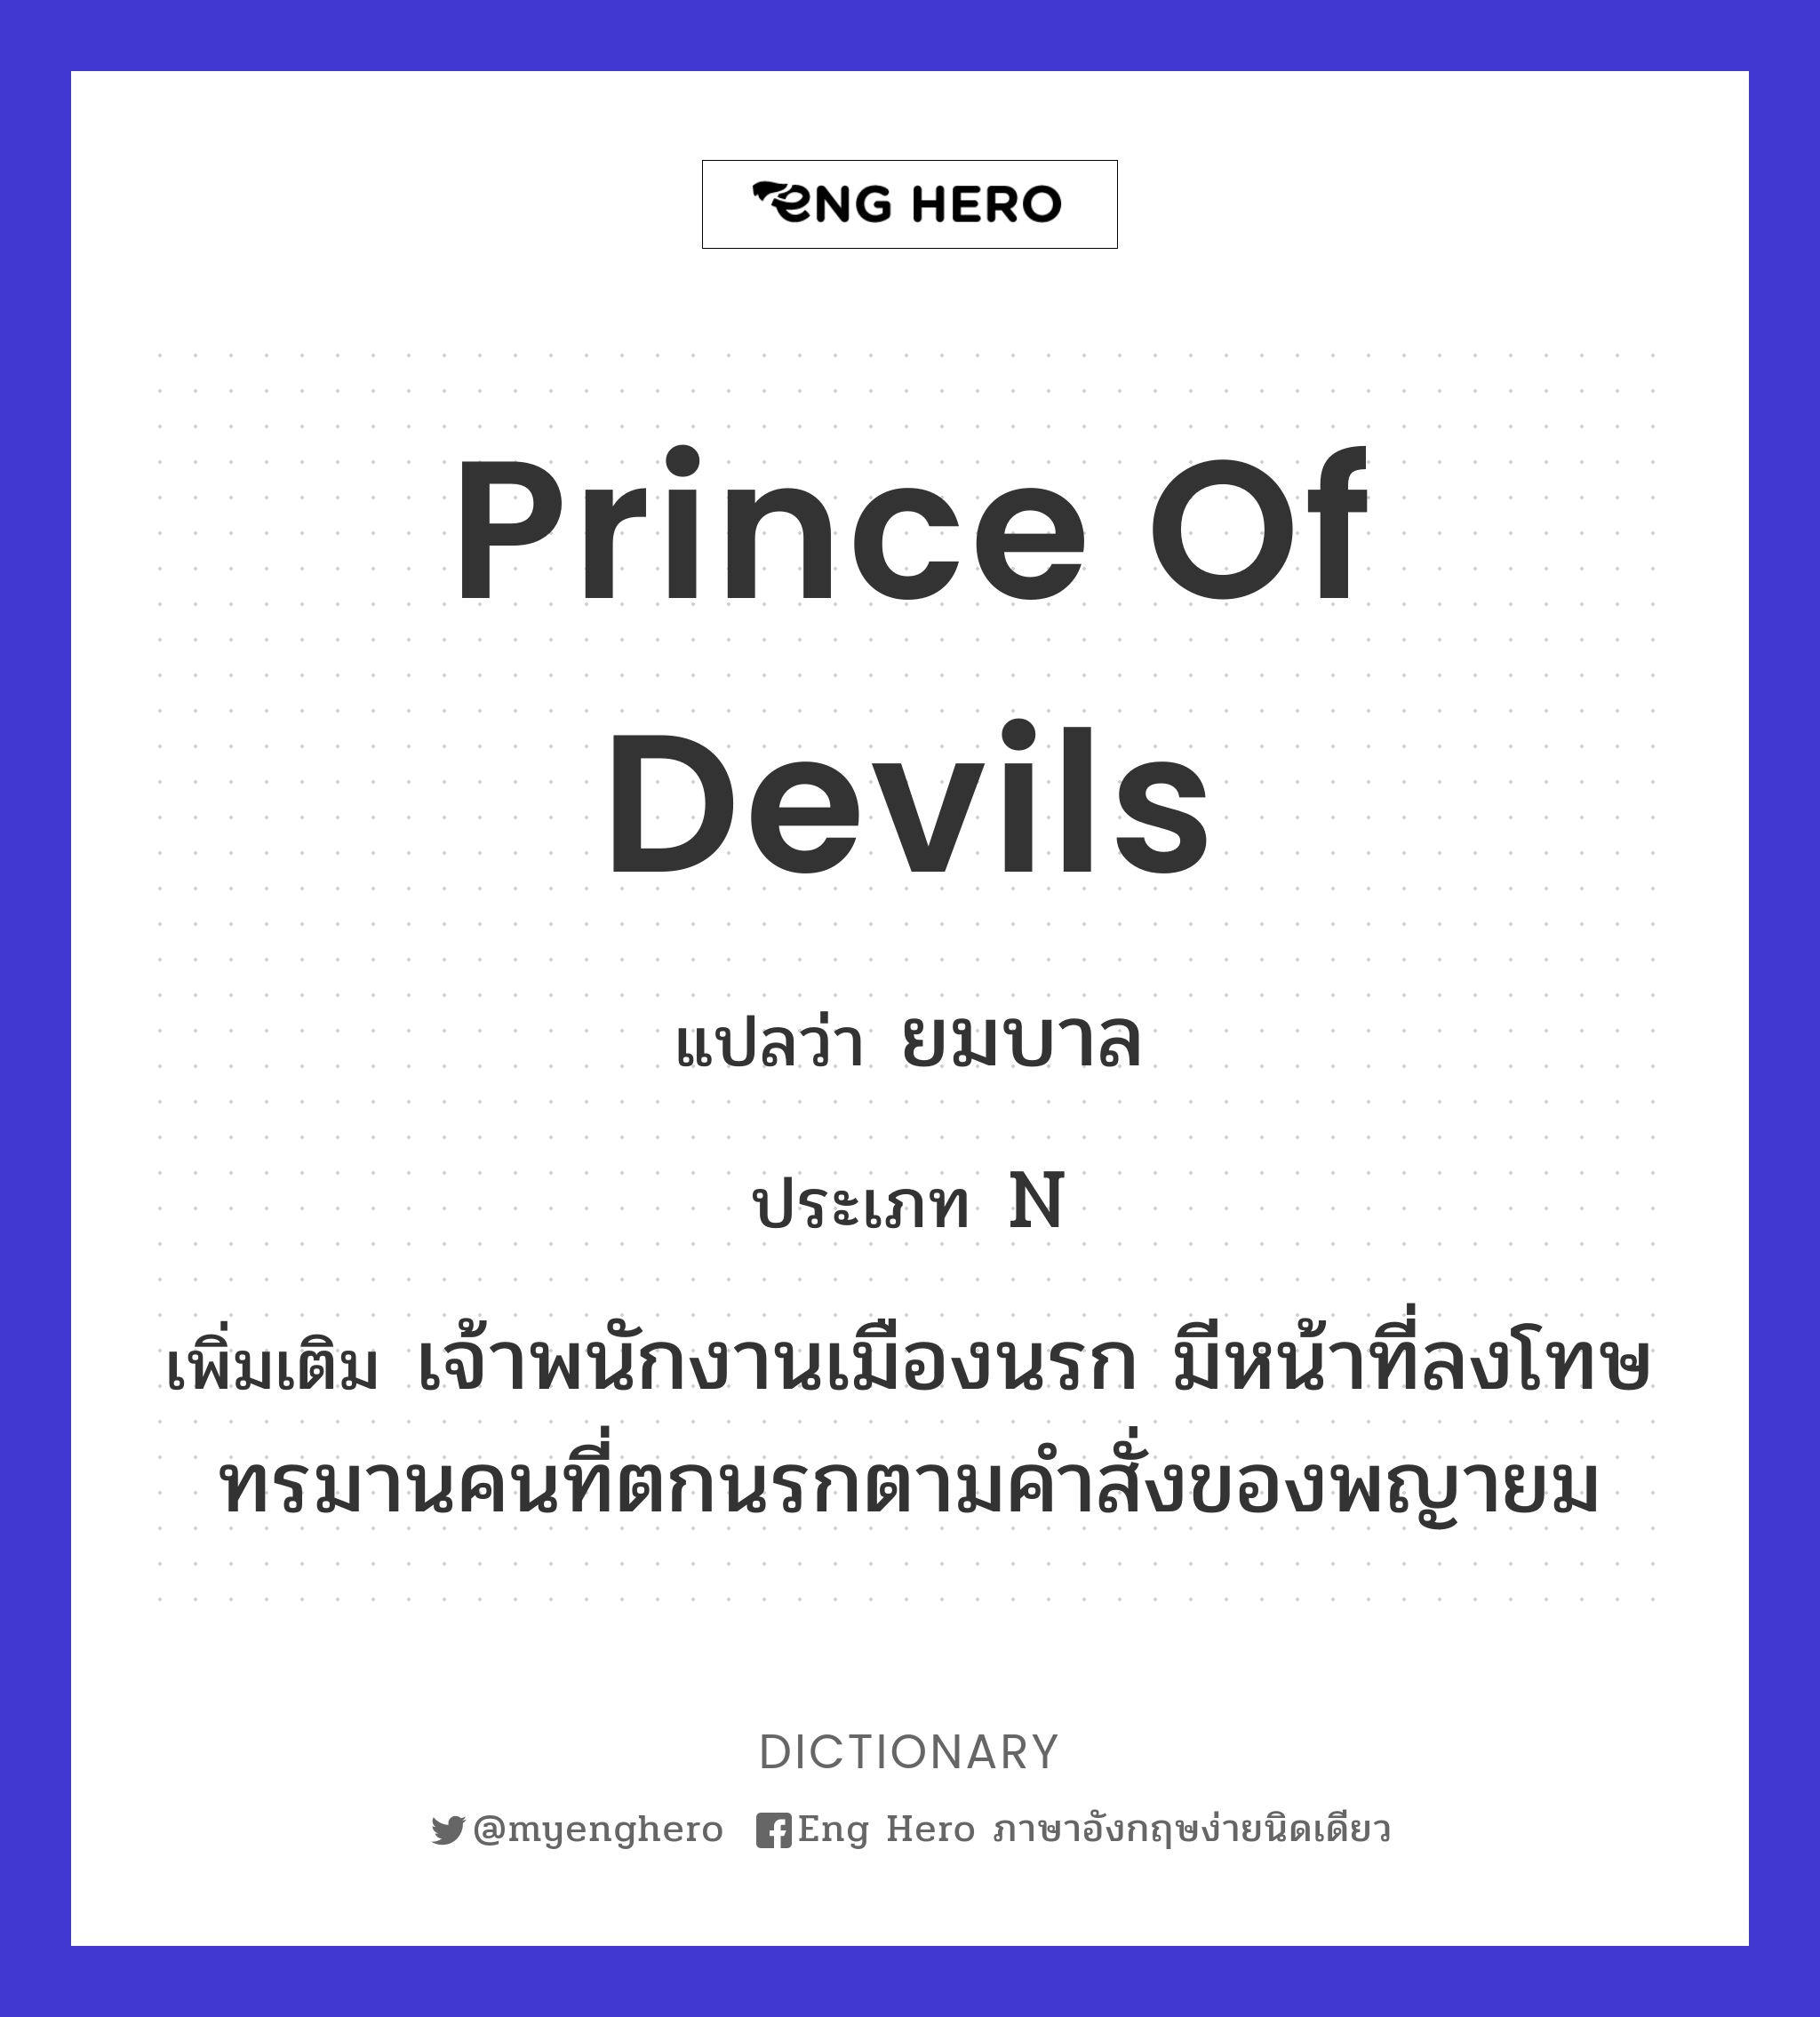 Prince of Devils